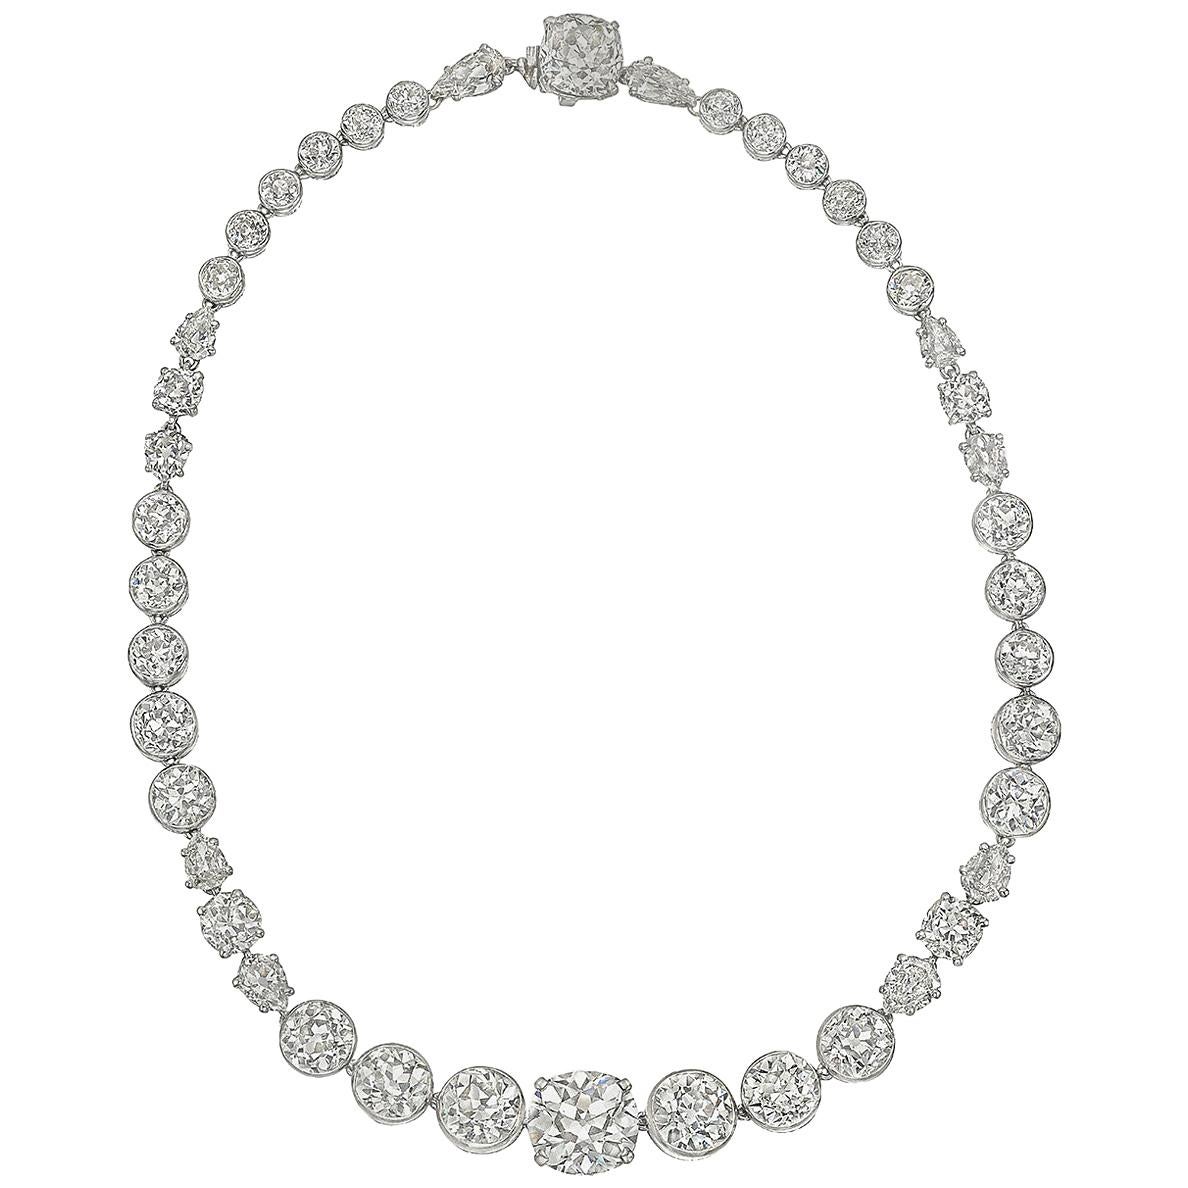 Antique Mixed-Cut Diamond Rivière Necklace, circa 1905